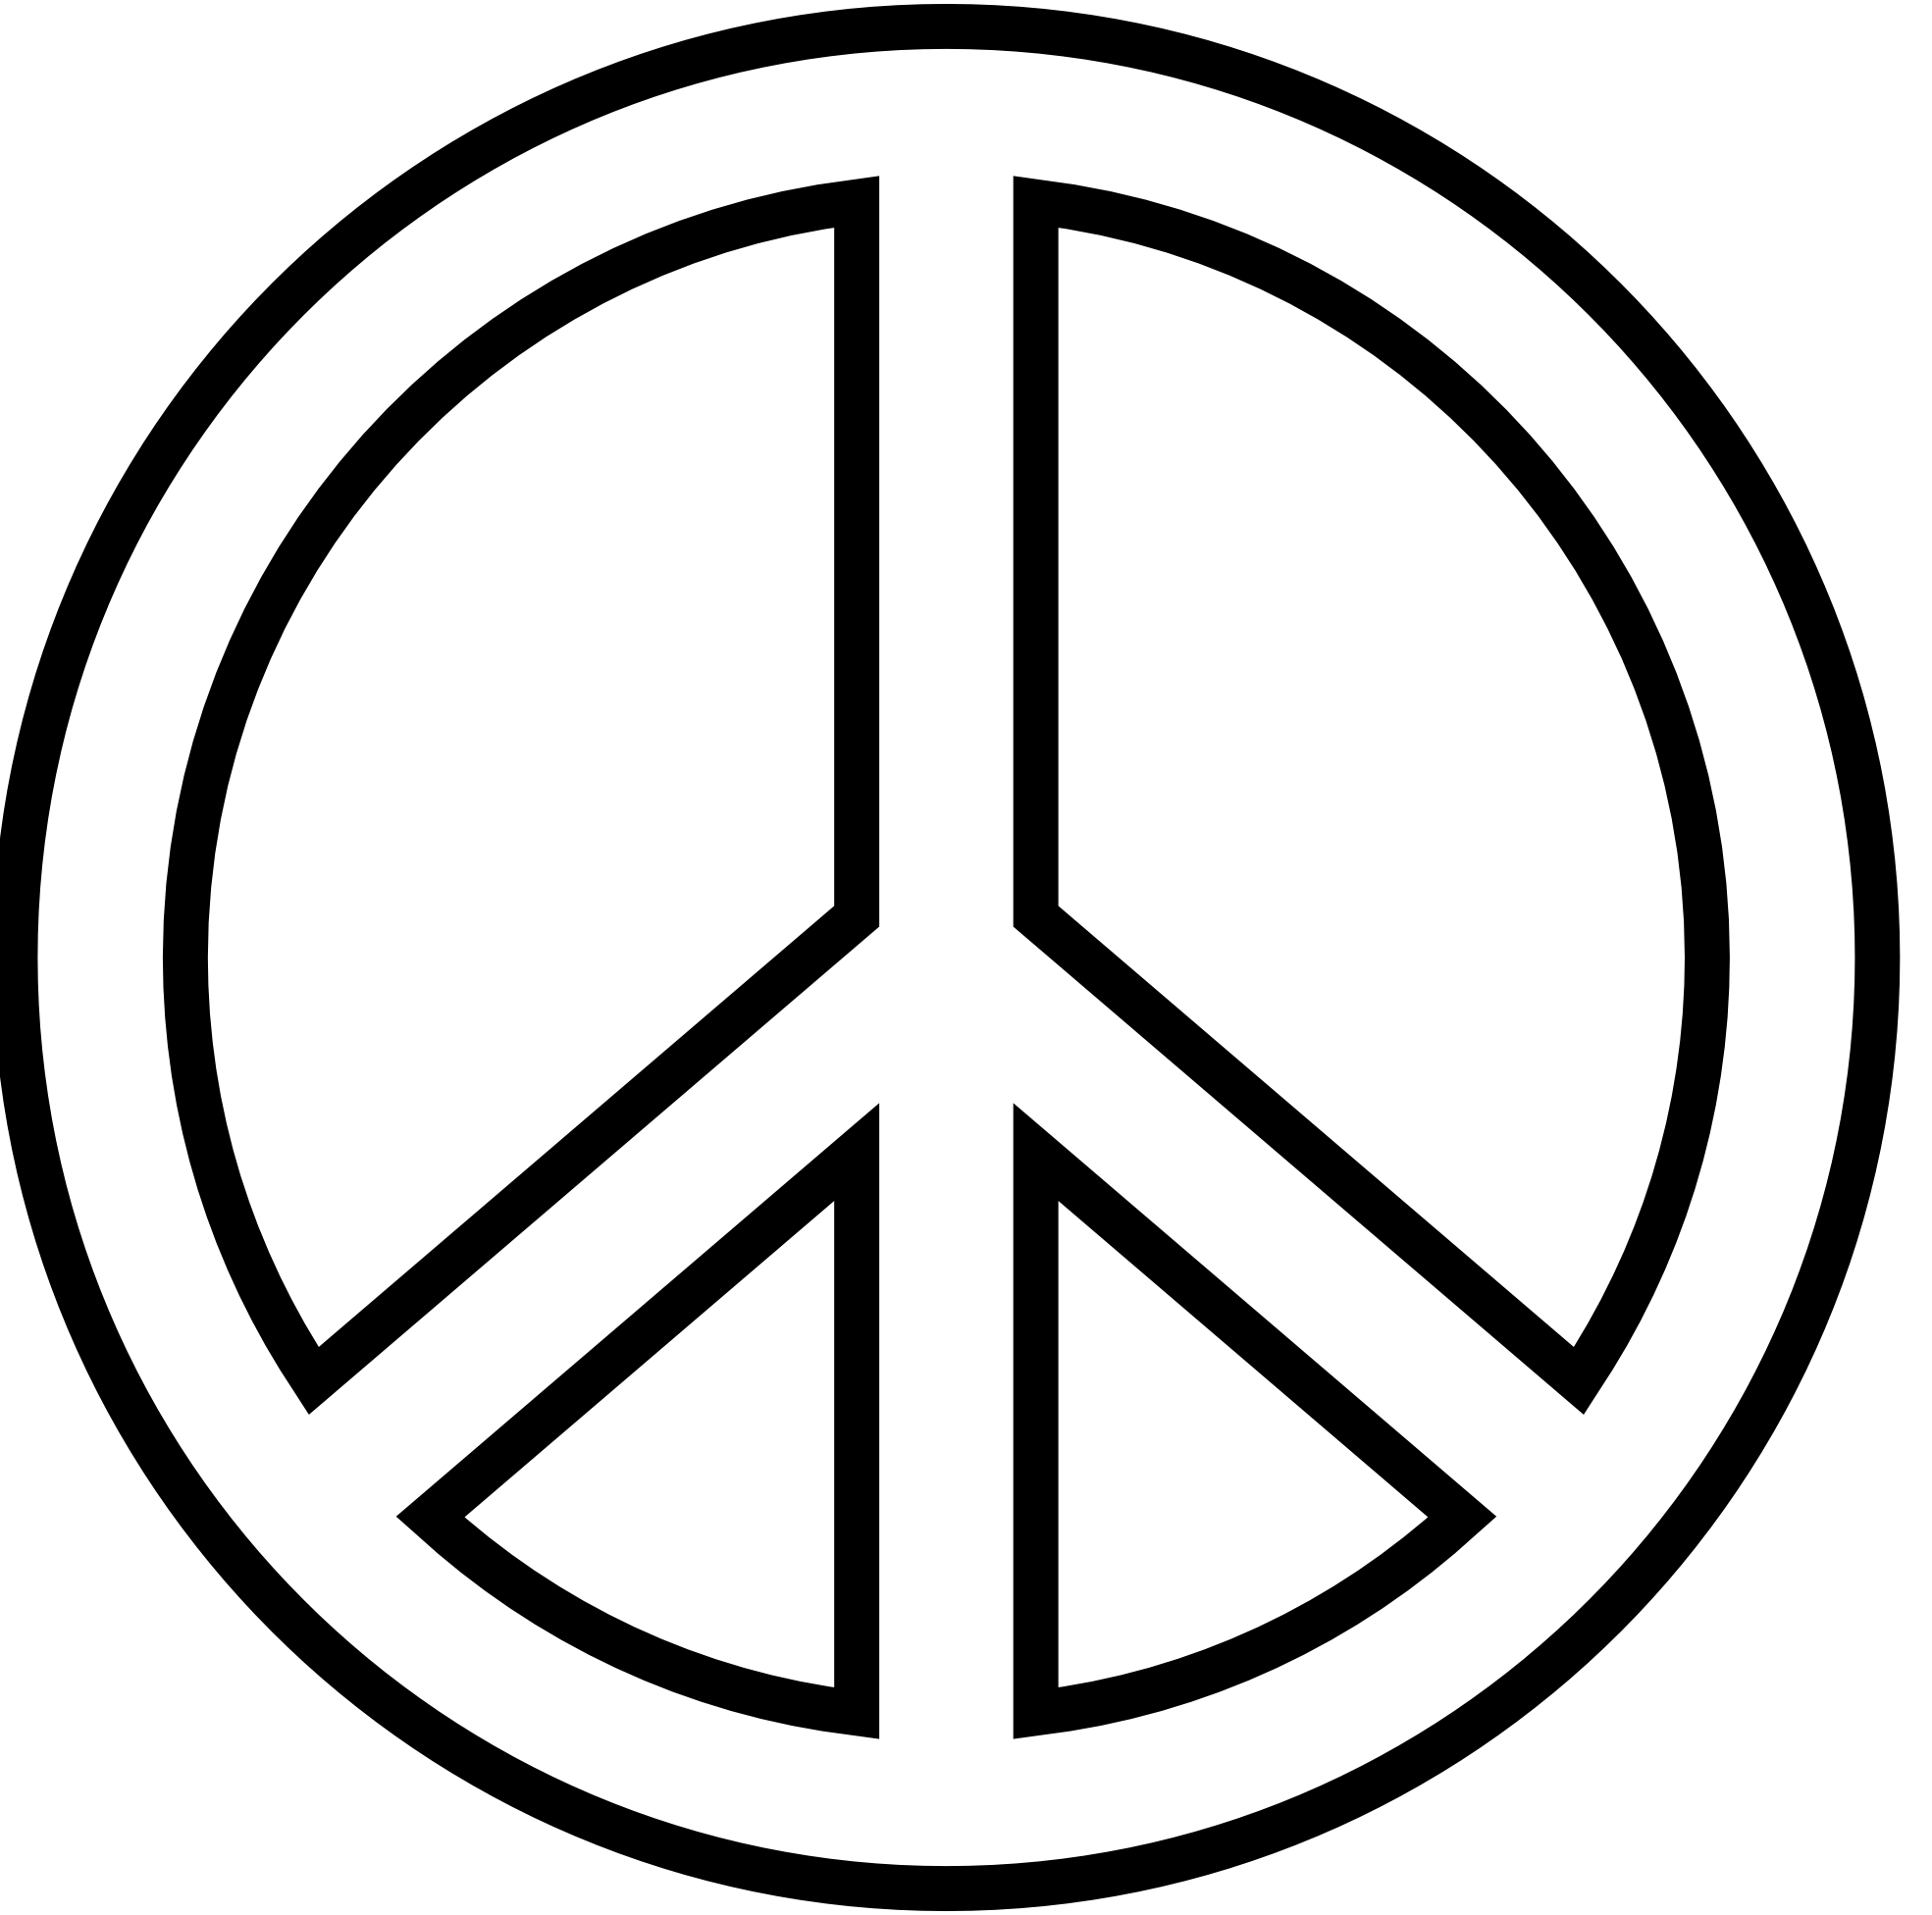 Symbole de la paix